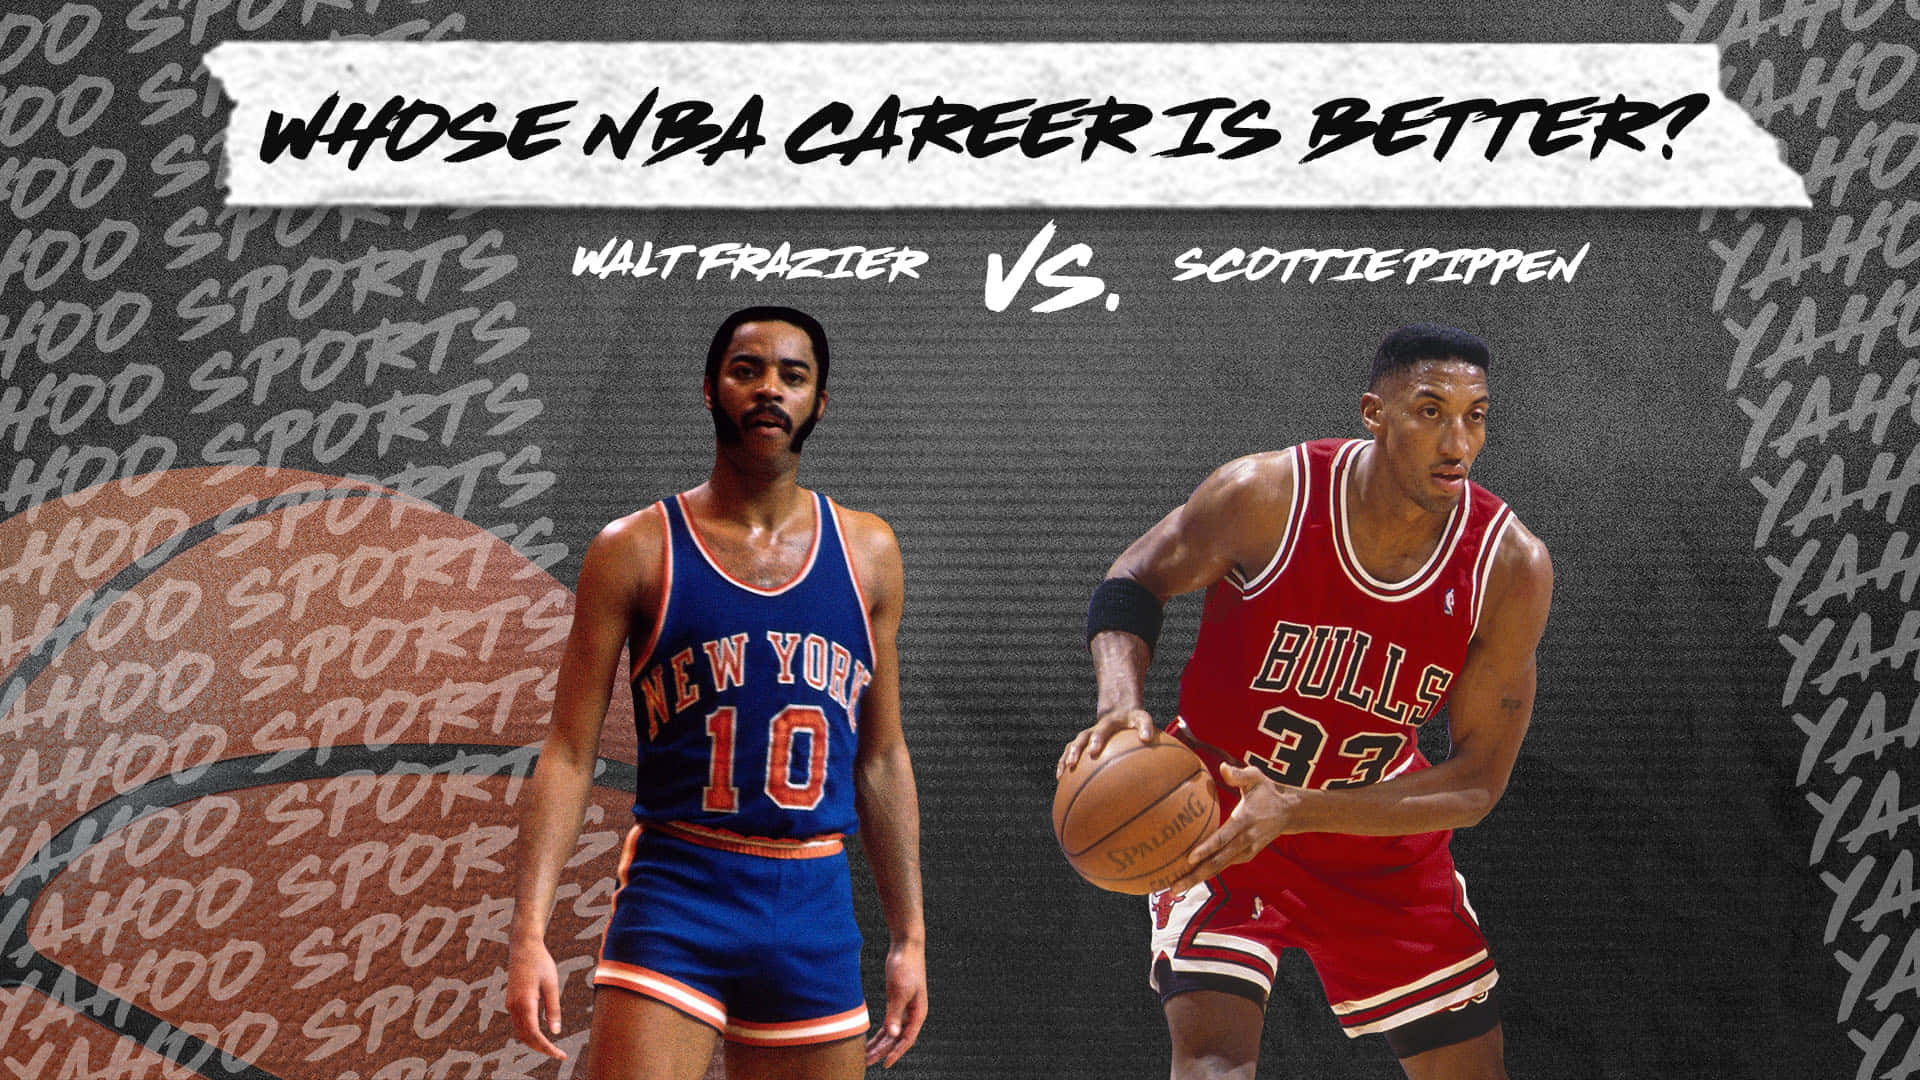 Walt Frazier VS. Scottie Pippen Carreer Comparison Wallpaper